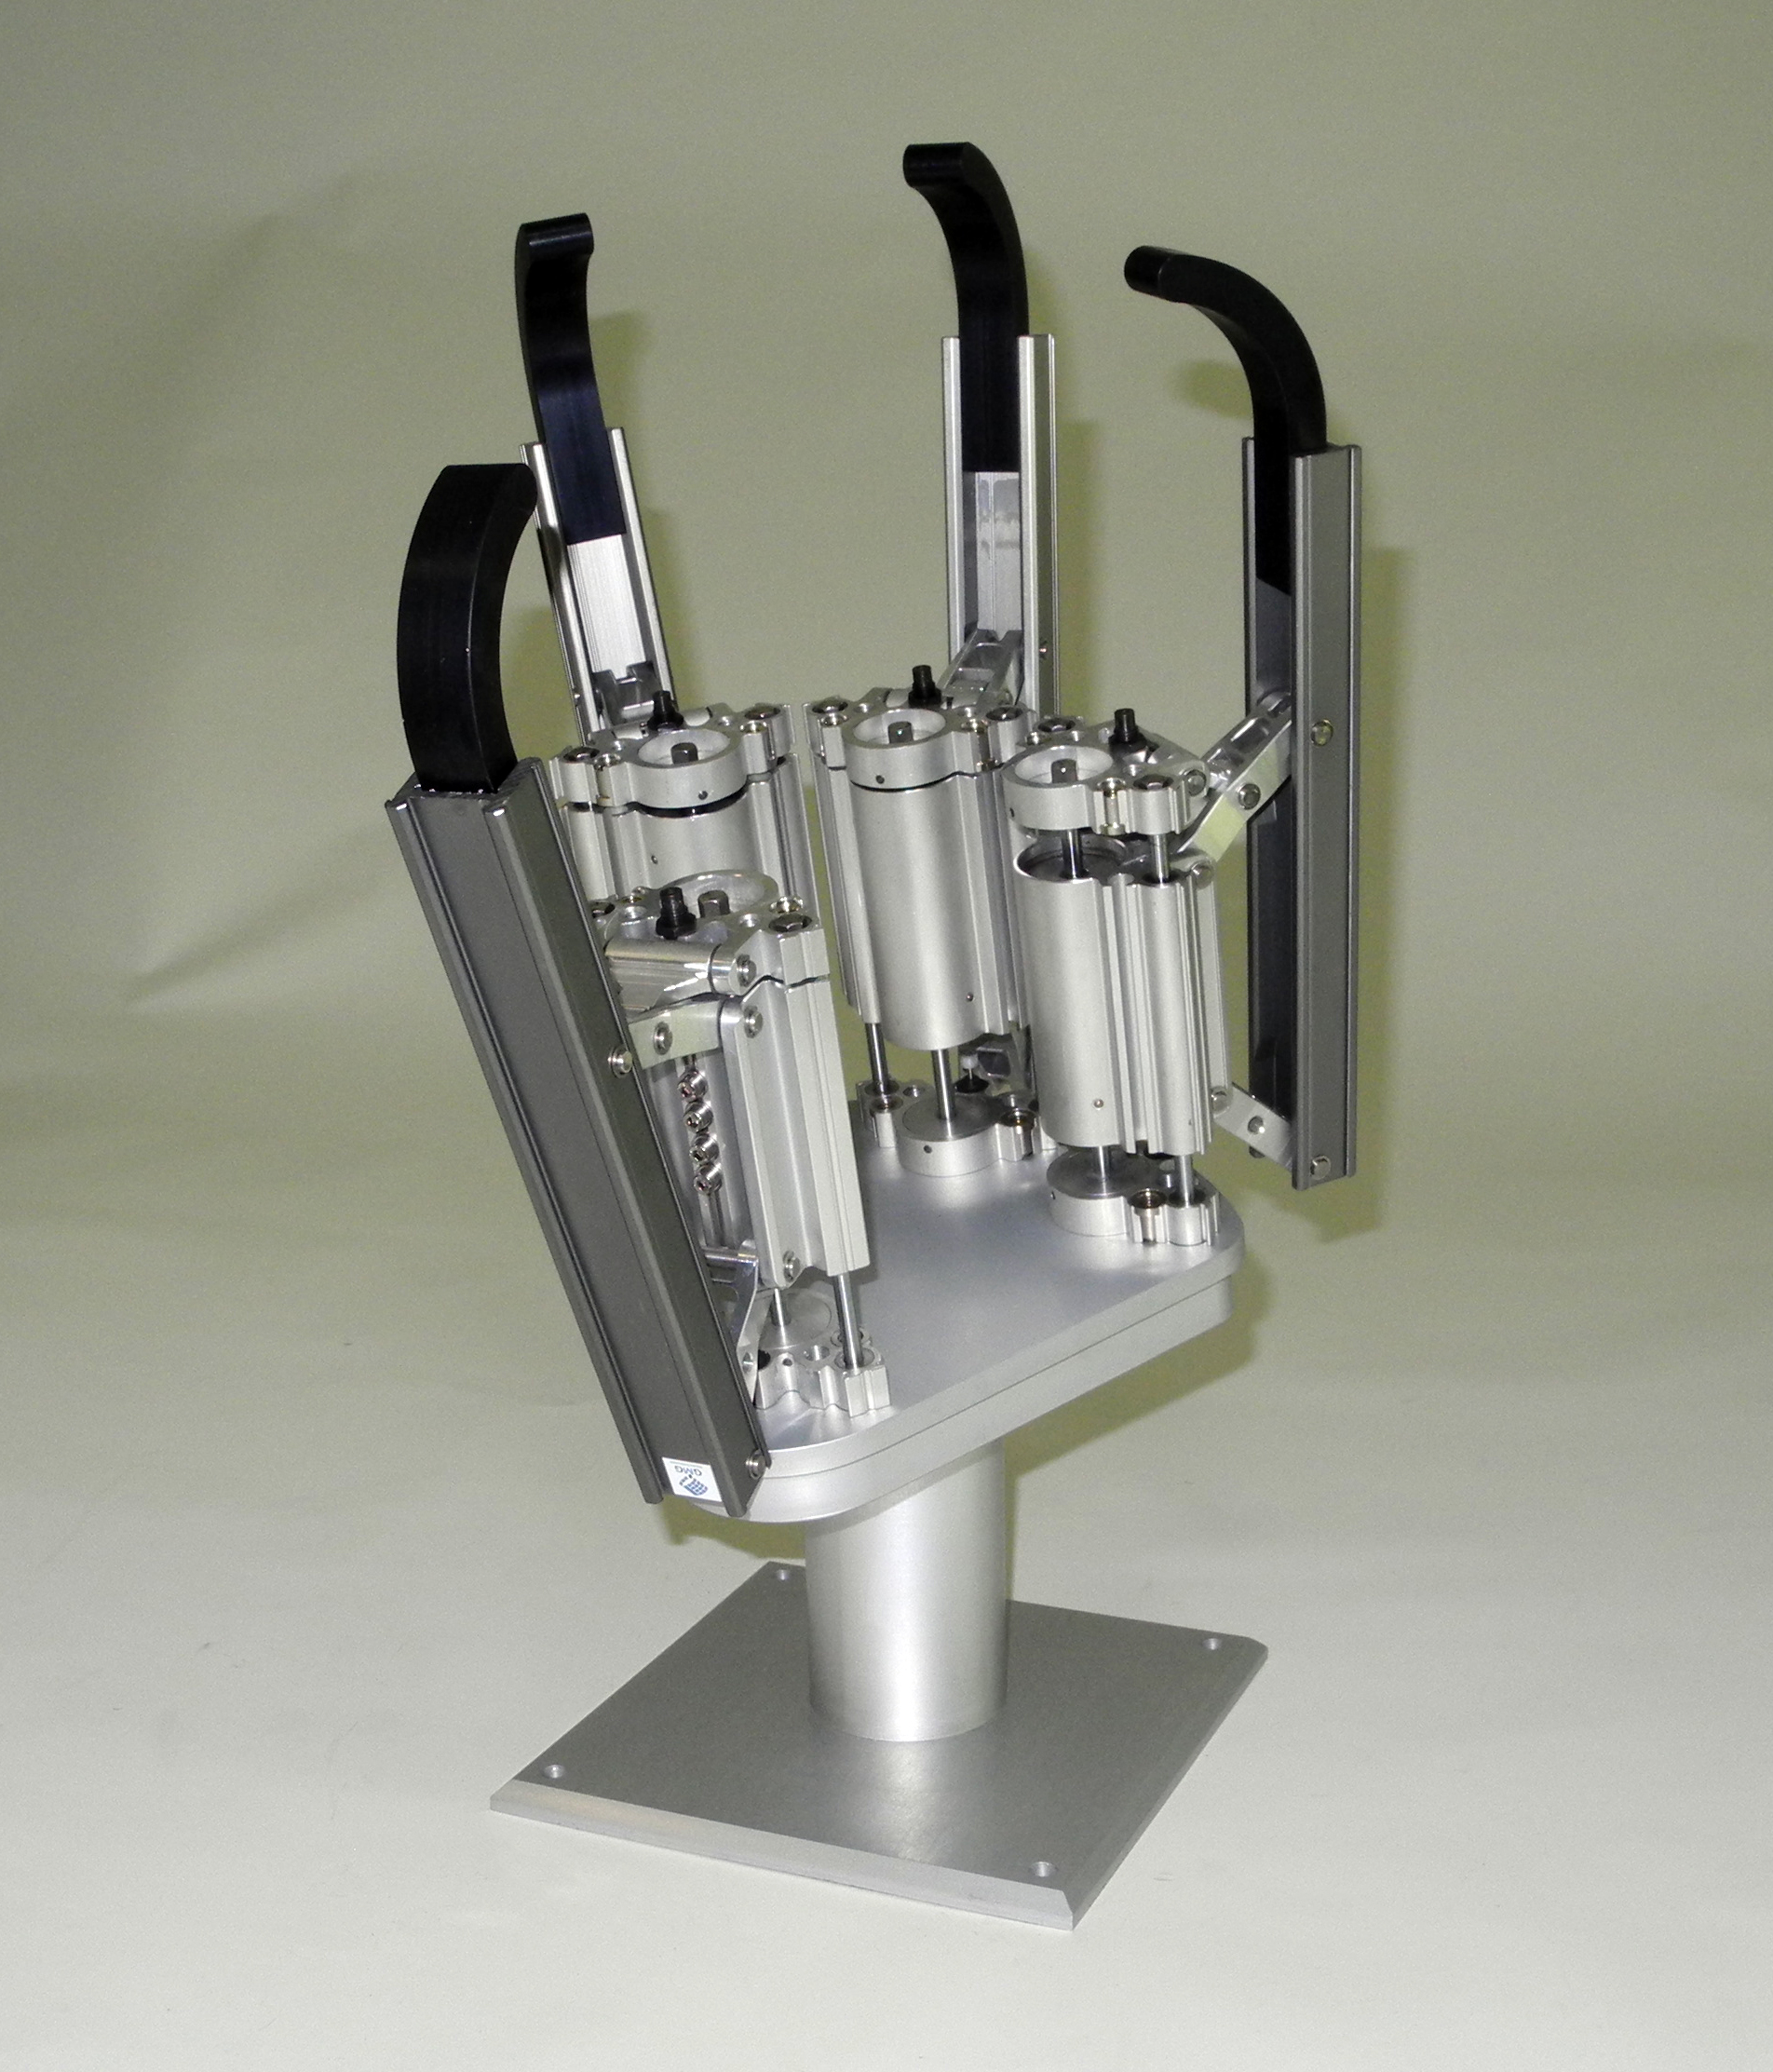 Modulares Roboter-Greifsystem "Soest Hand" (Heinz Nixdorf MuseumsForum CC BY-NC-SA)